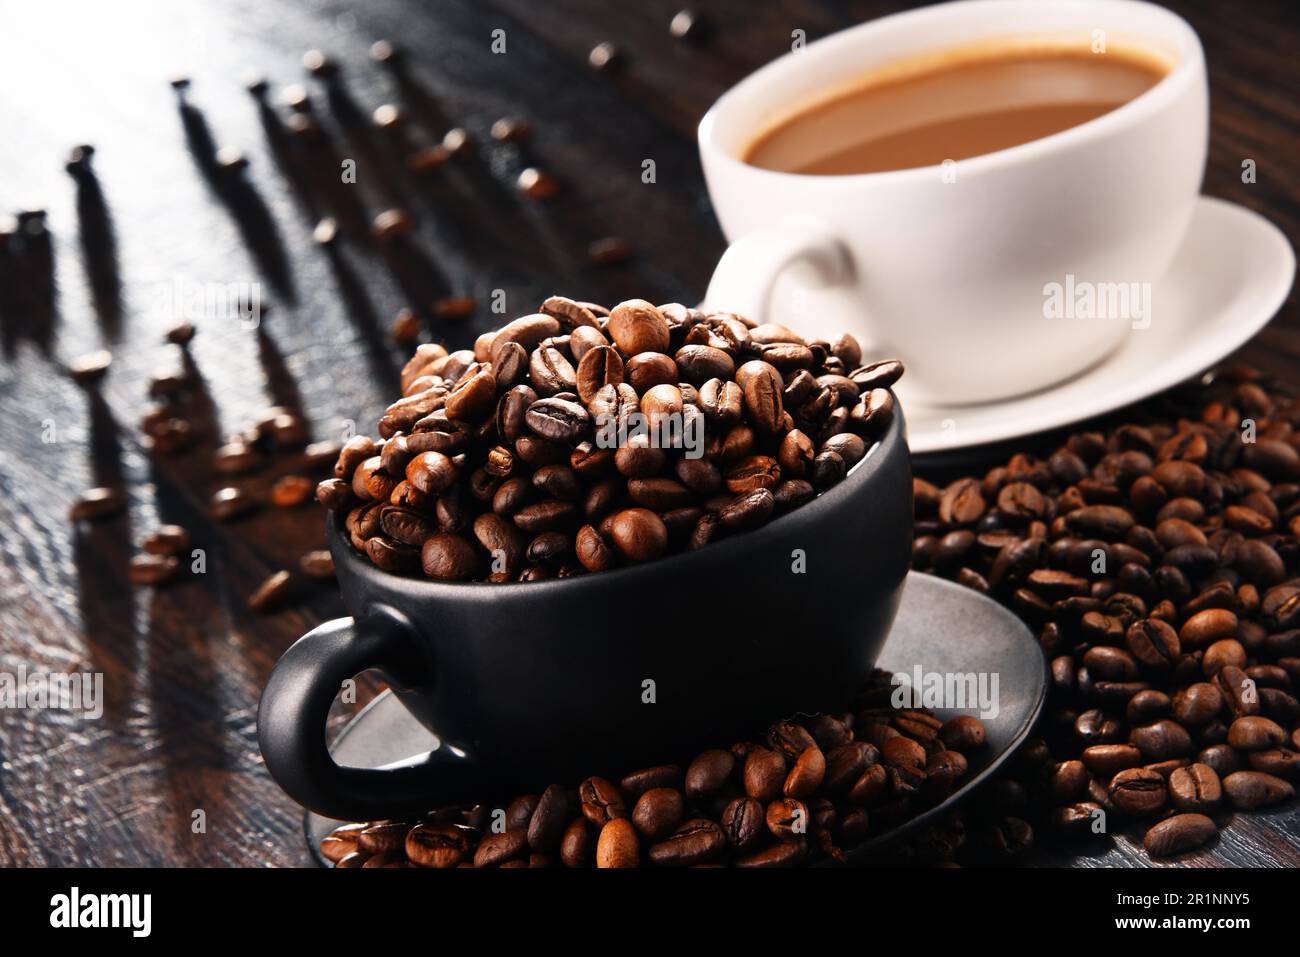 Composición de tazas de café fotografías e imágenes de alta resolución -  Página 2 - Alamy